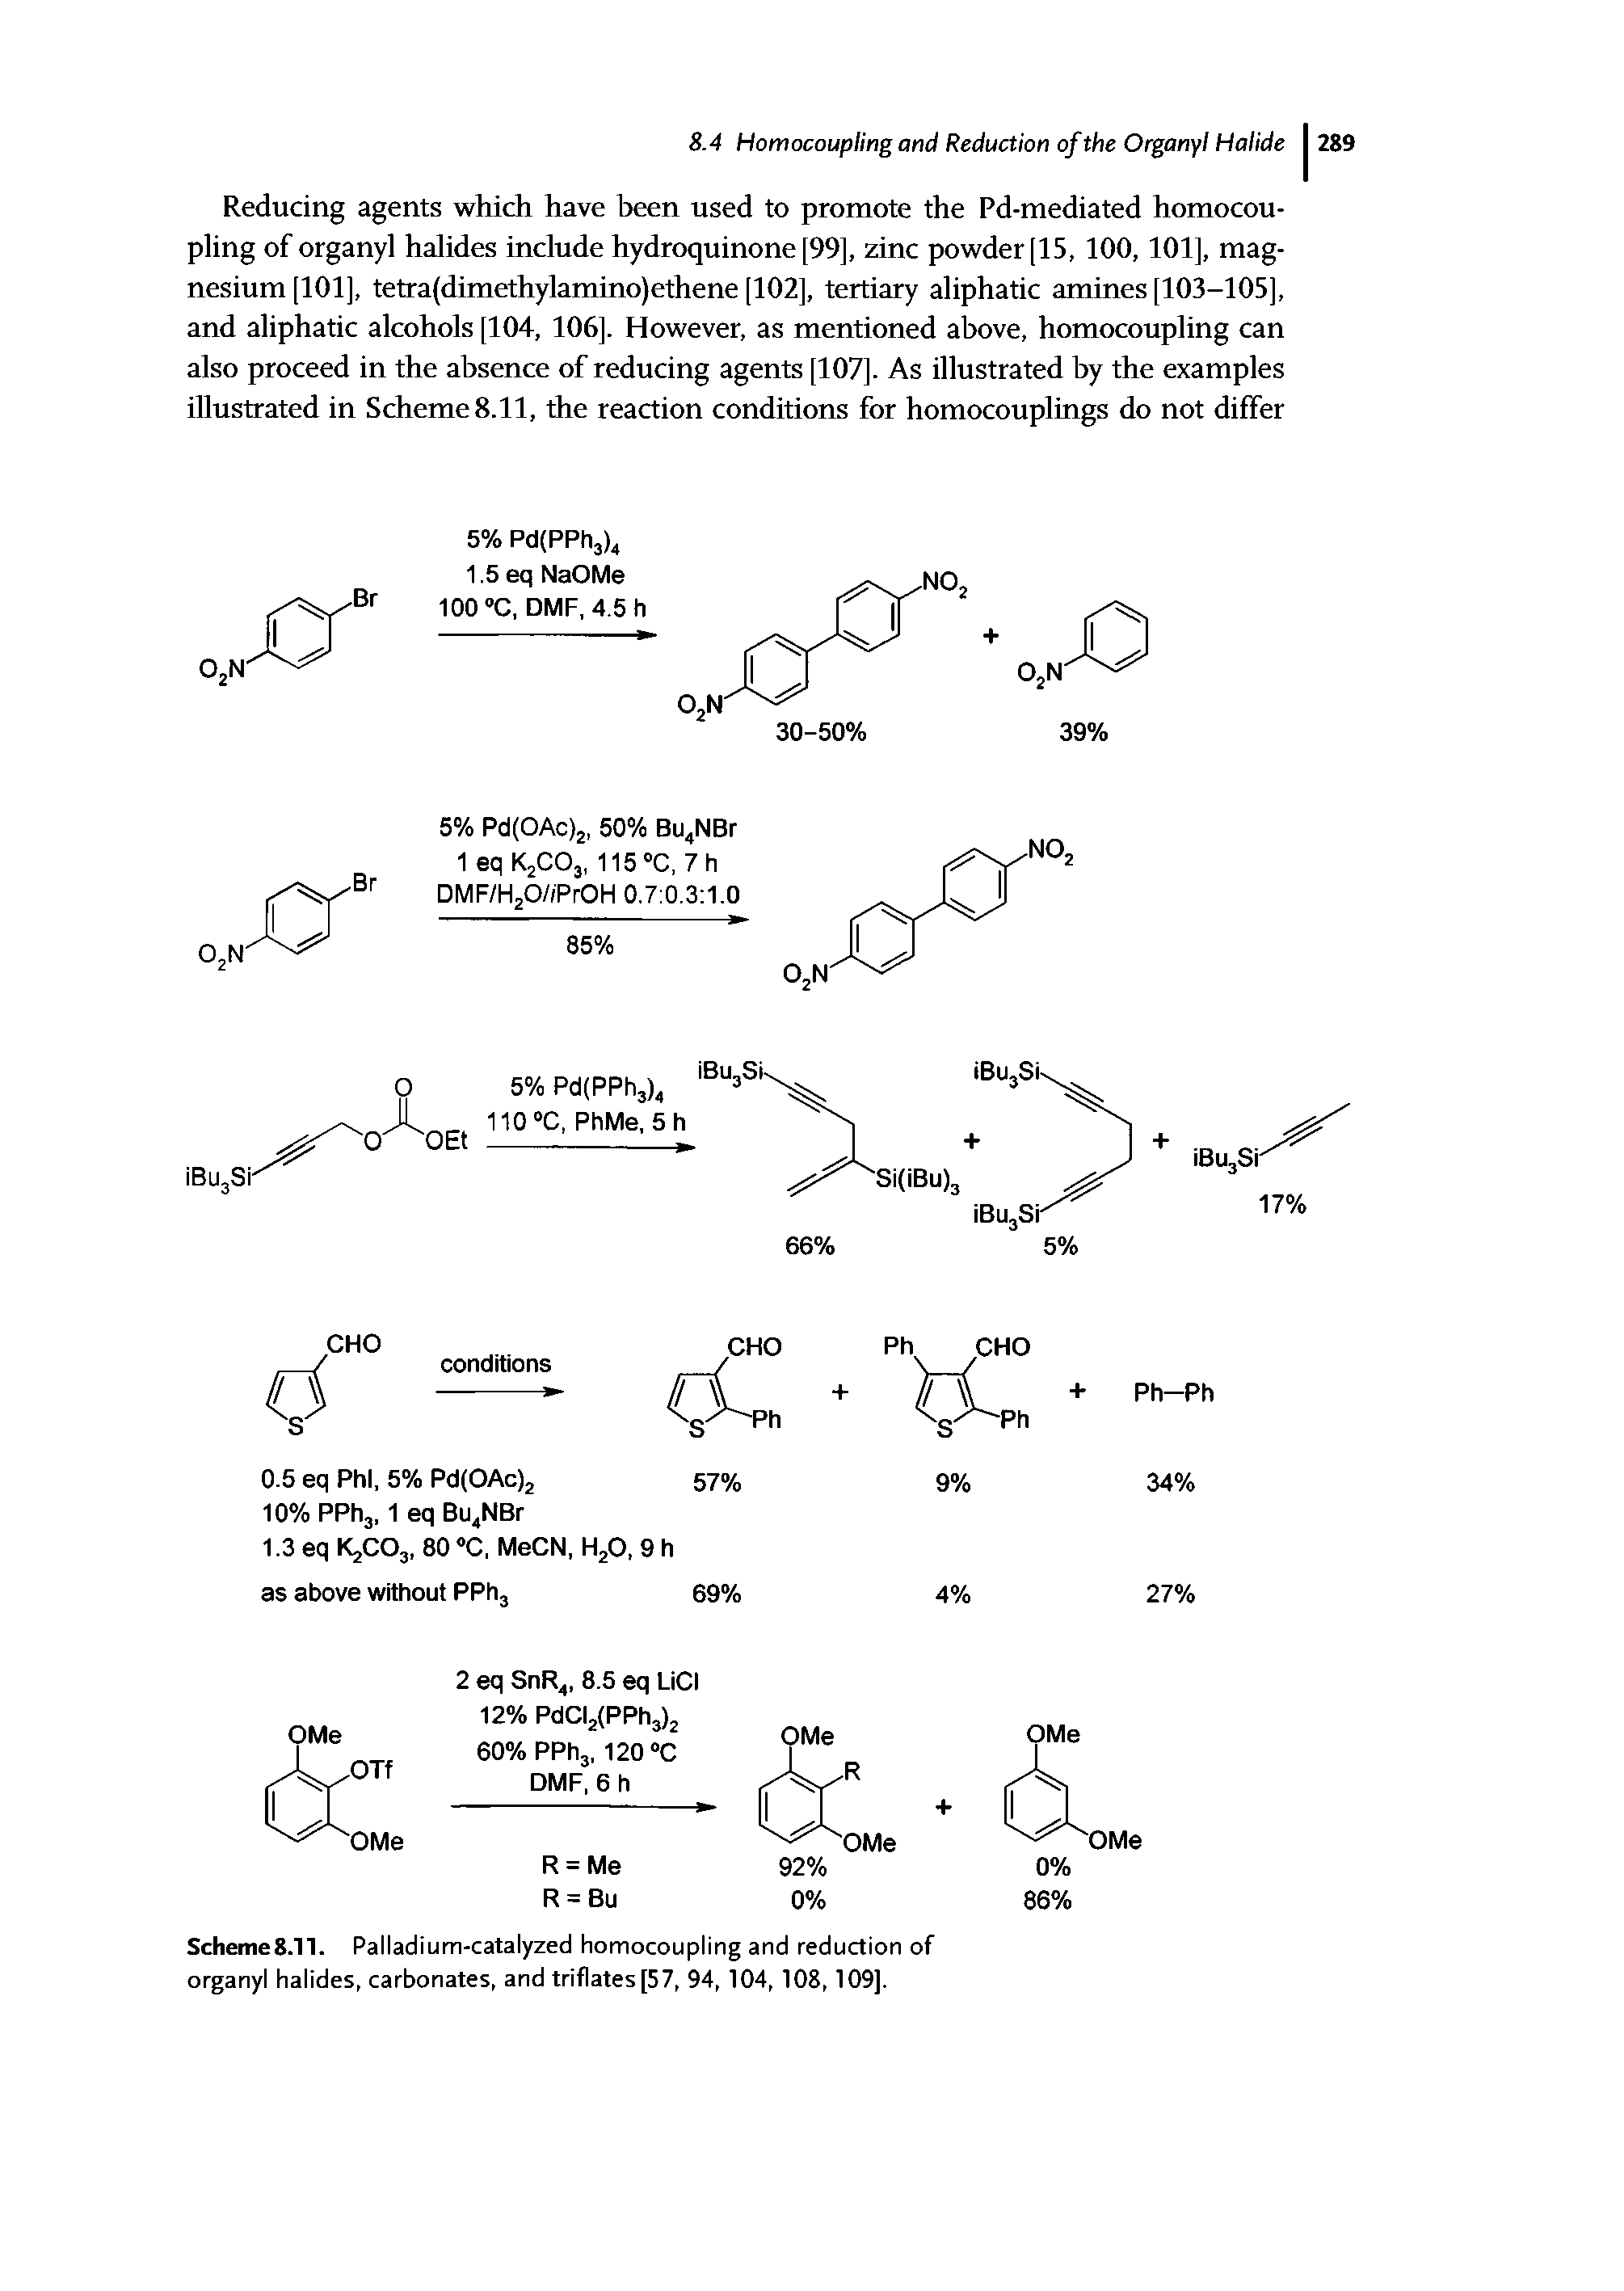 Scheme8.11. Palladium-catalyzed homocoupling and reduction of organyl halides, carbonates, and triflates [57, 94, 104, 108,109].